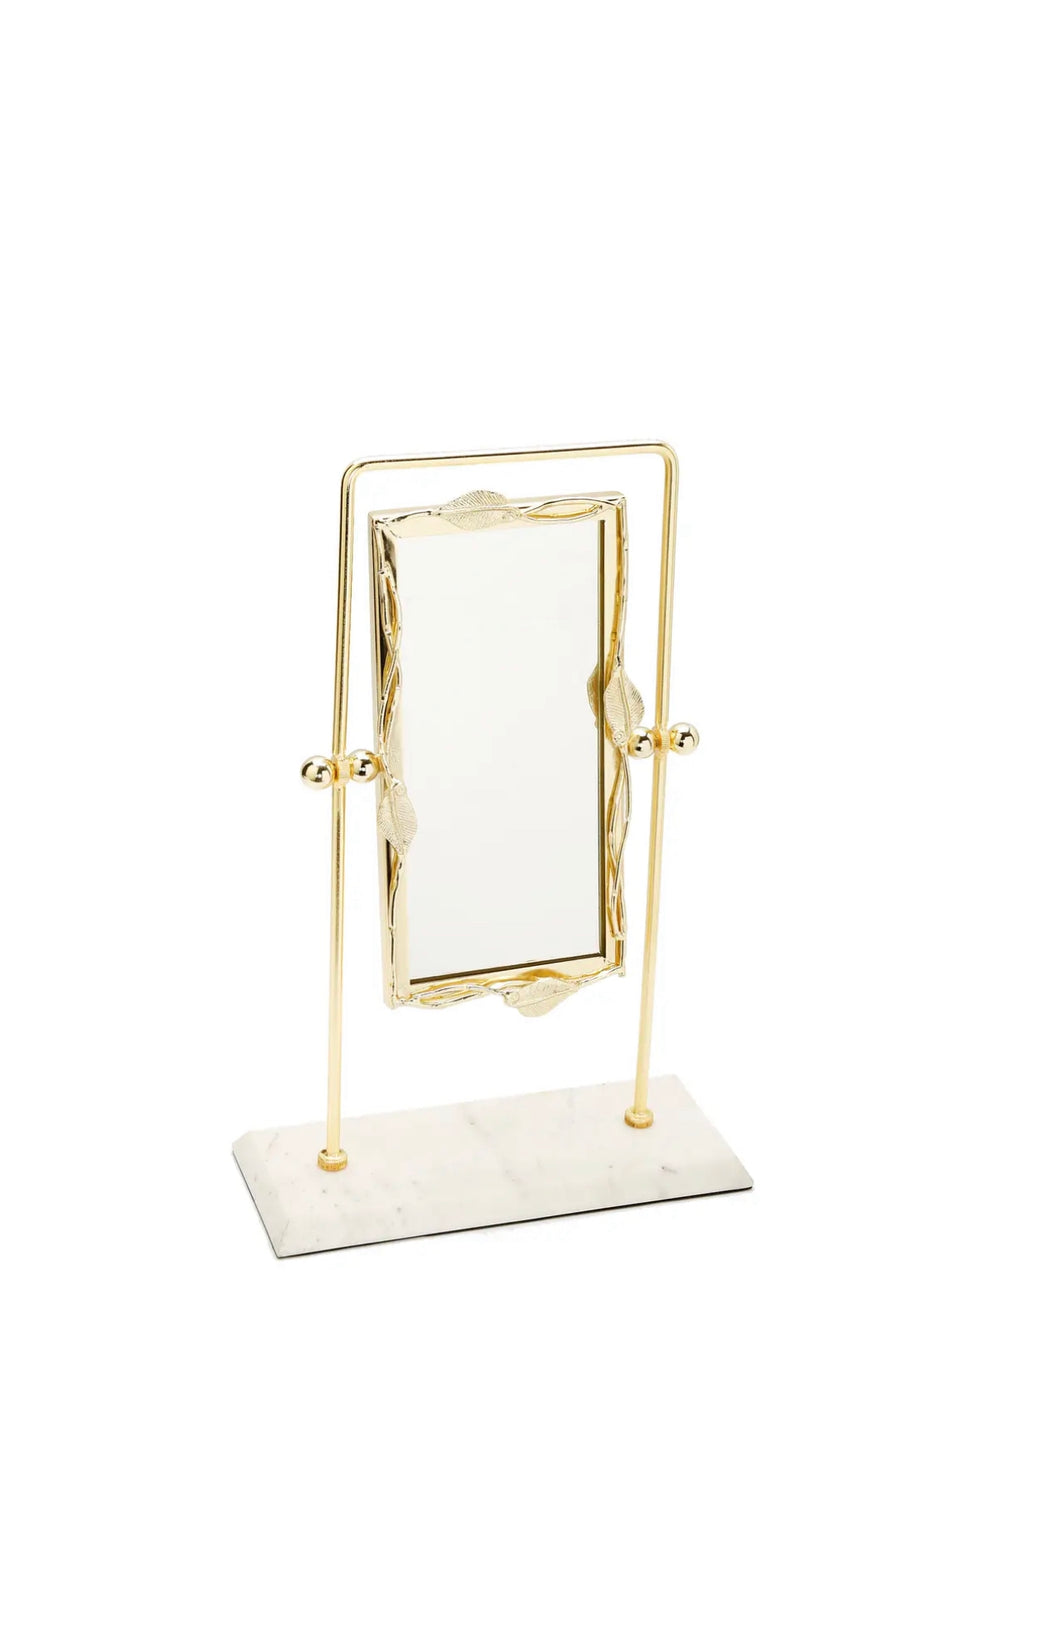 Rectangular Table Mirror Gold Leaf Border White Marble Base